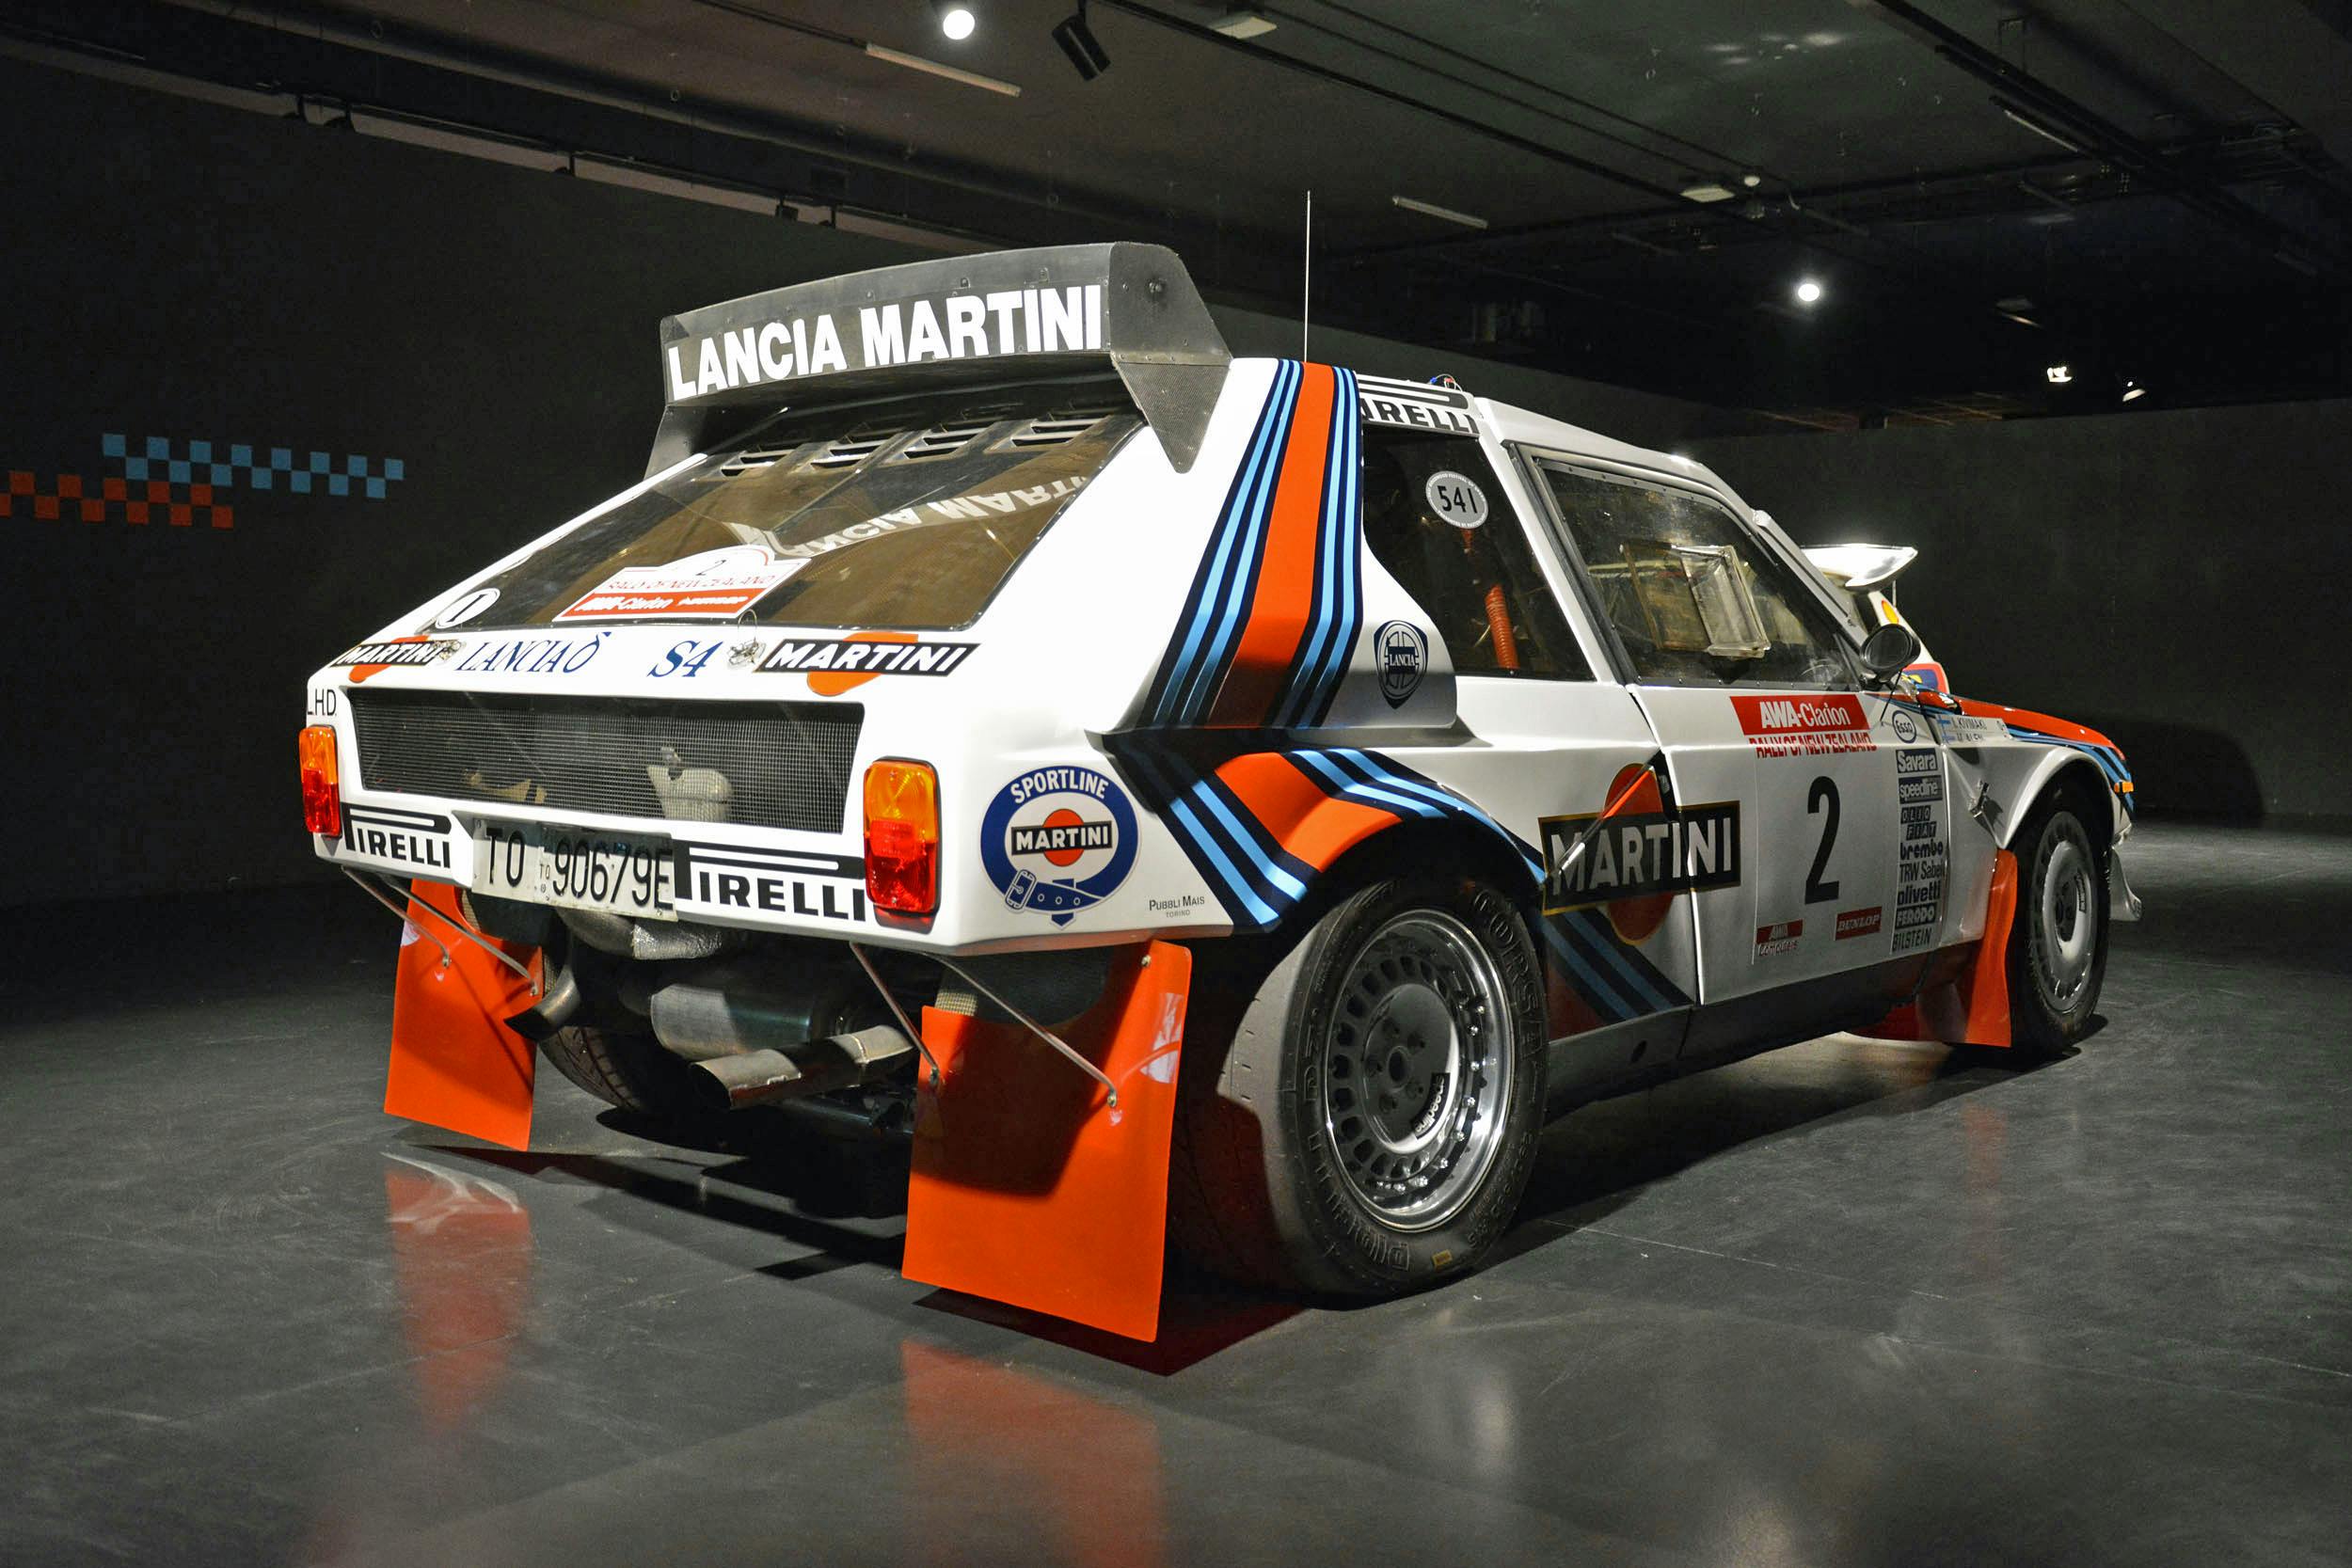 Turin Rally Car Museuem Exhibit